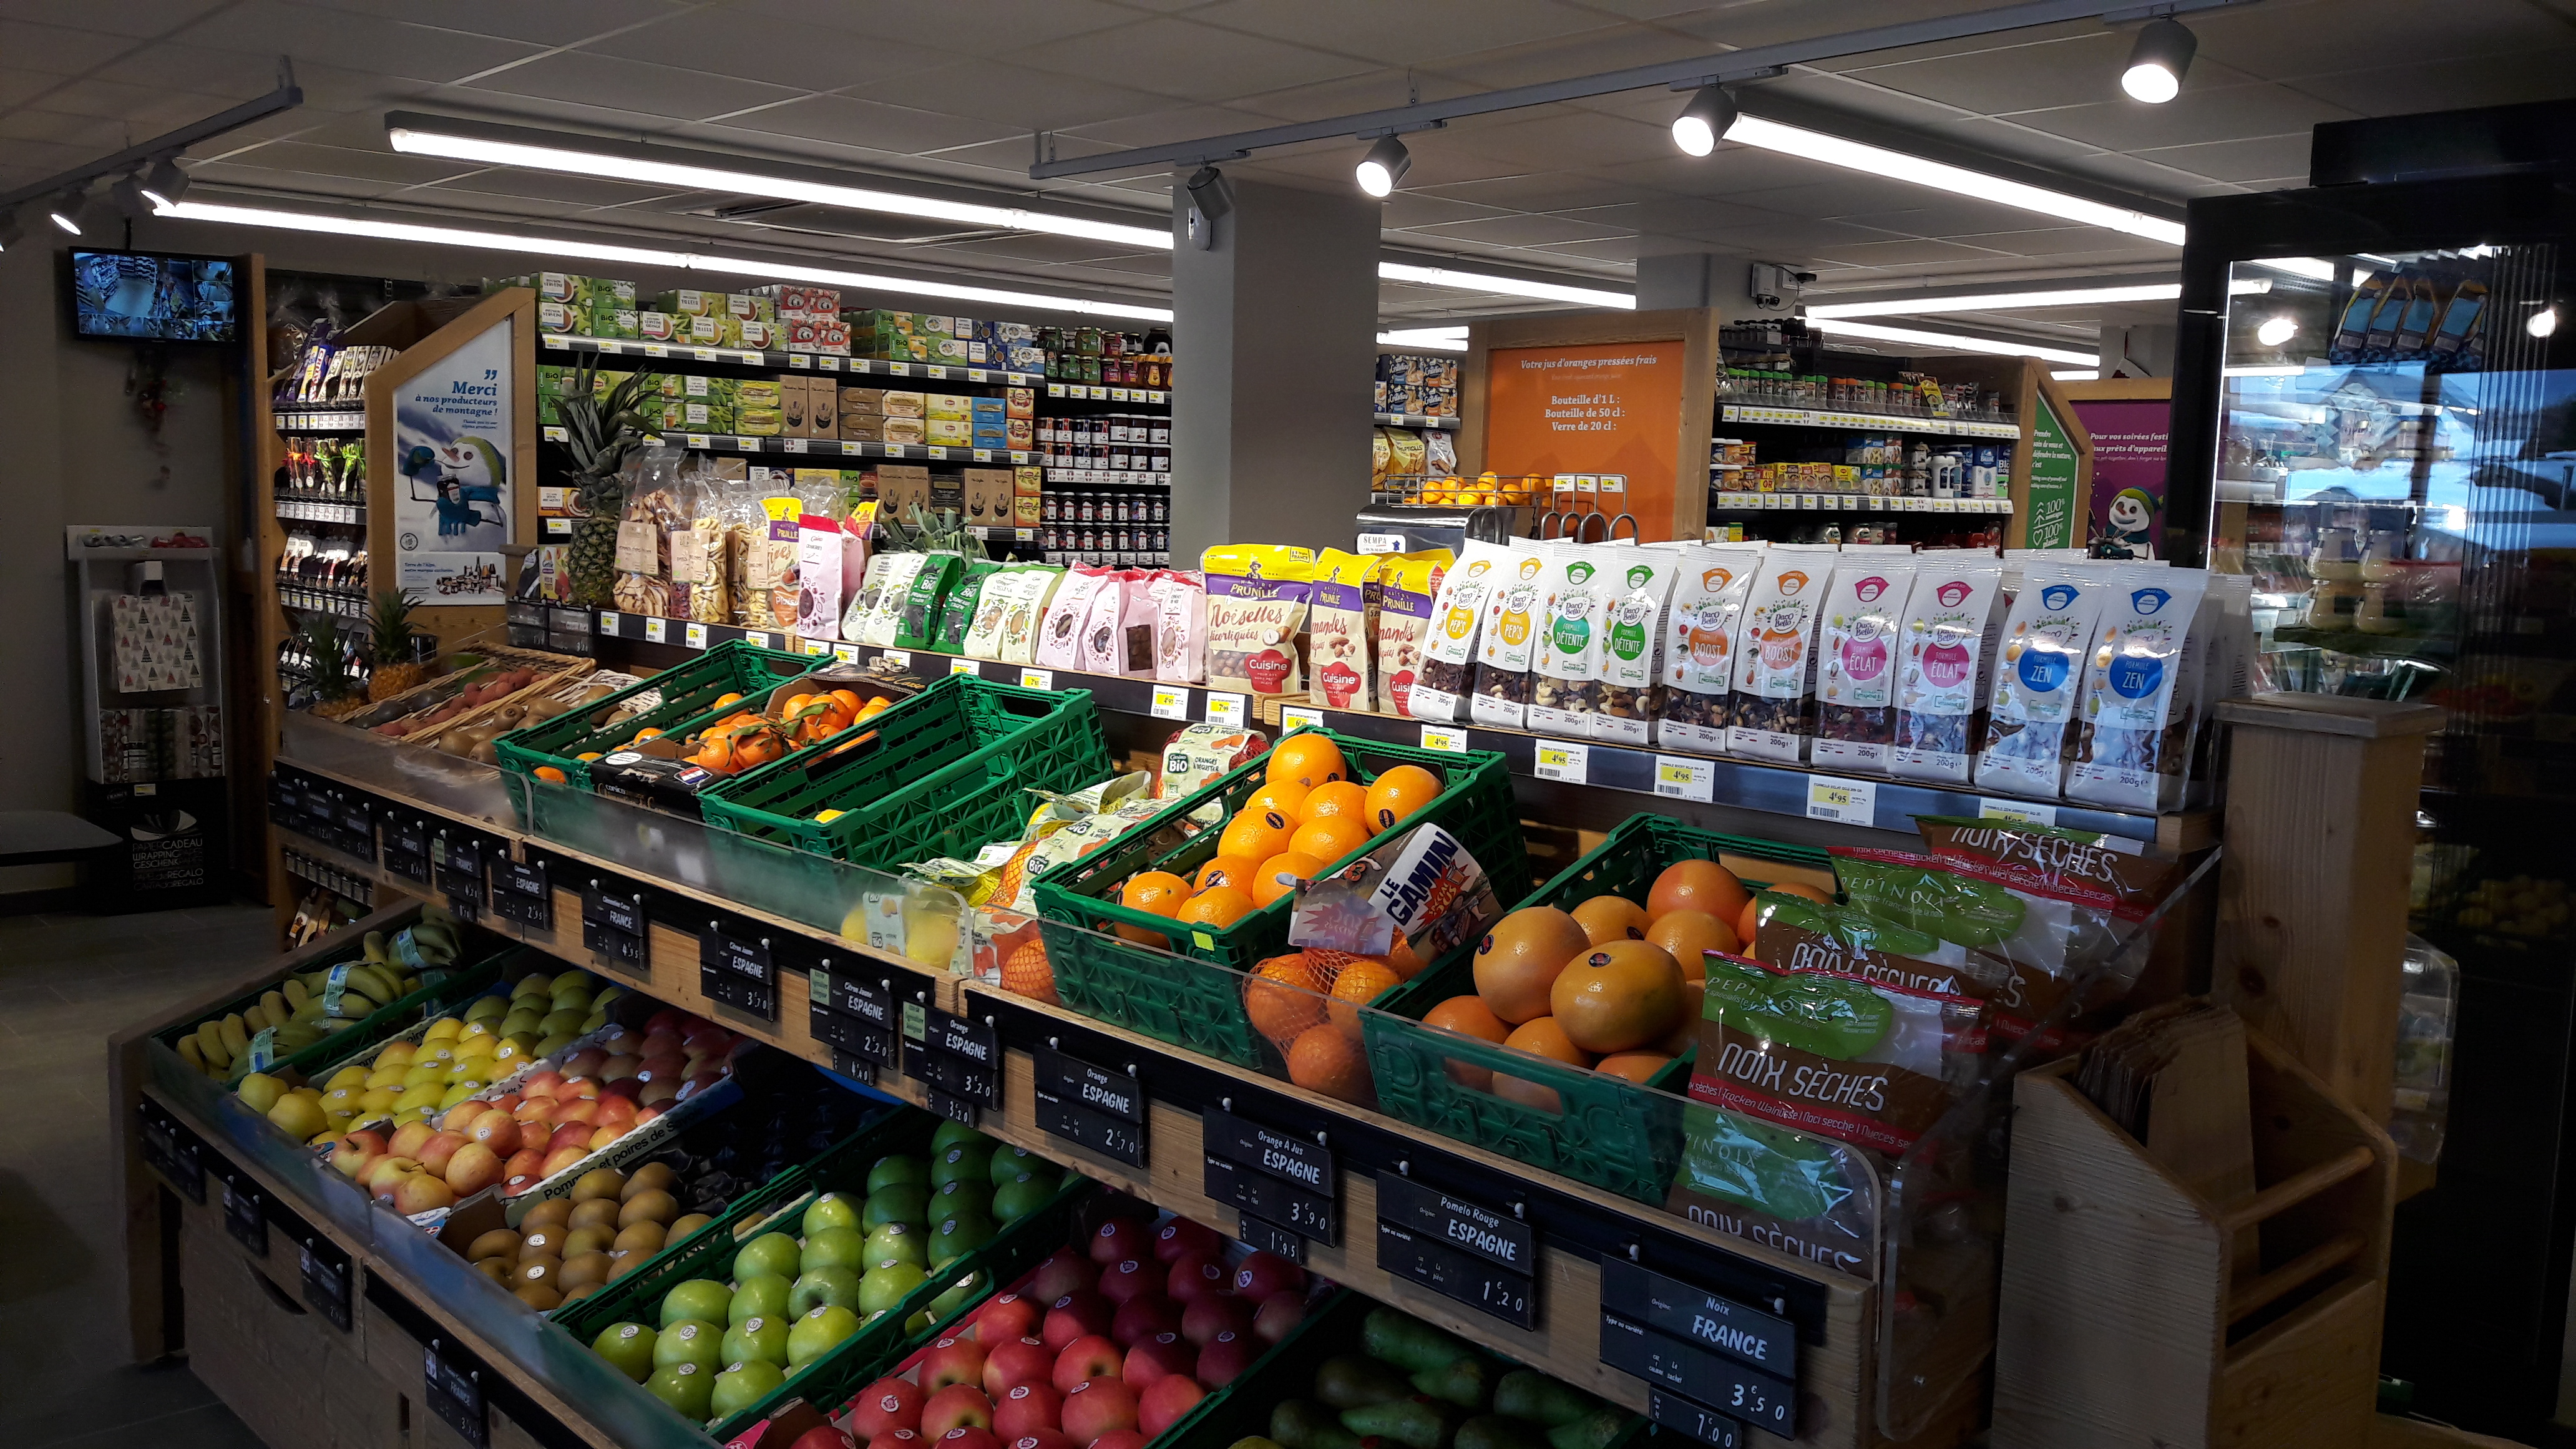 Sherpa supermarket Féclaz (la) fruits and vegetables